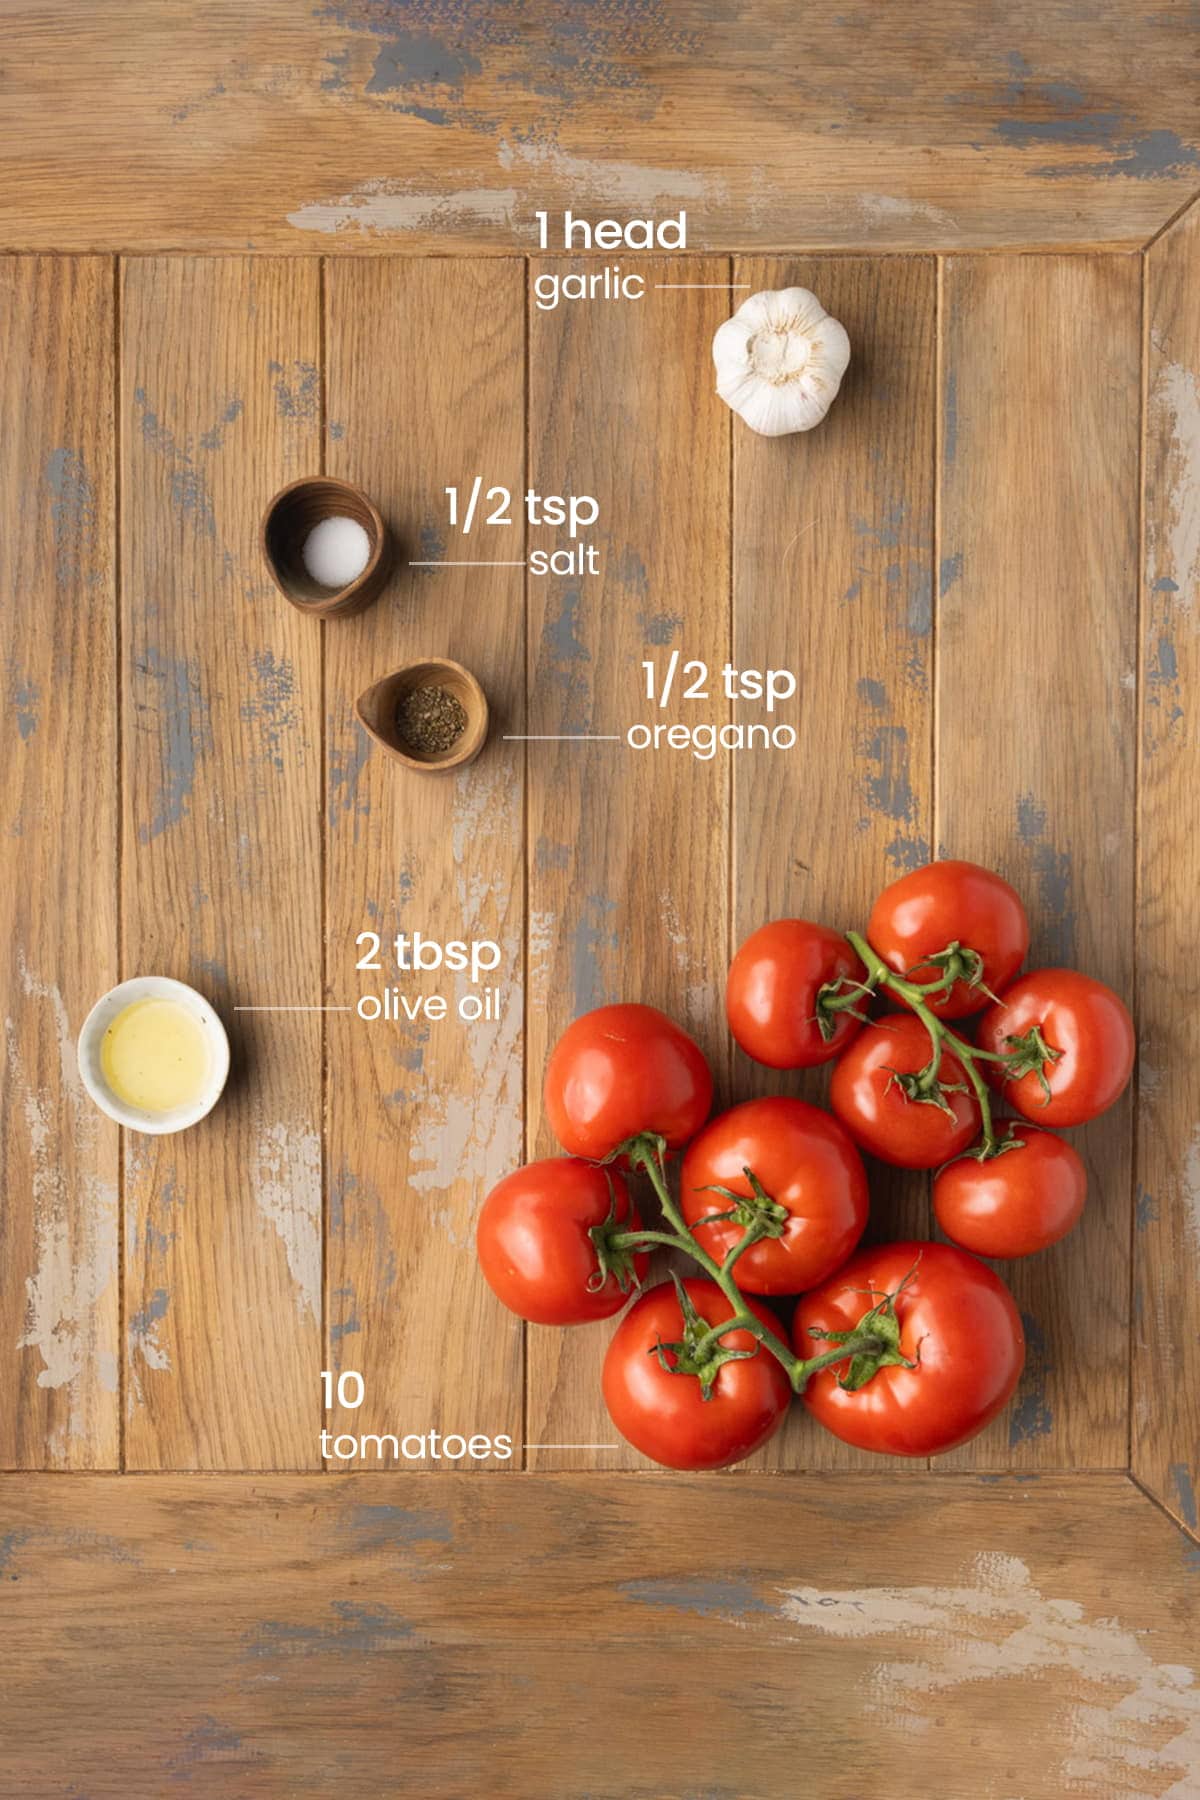 ingredients for homemade pizza sauce - garlic, salt, oregano, olive oil, tomatoes